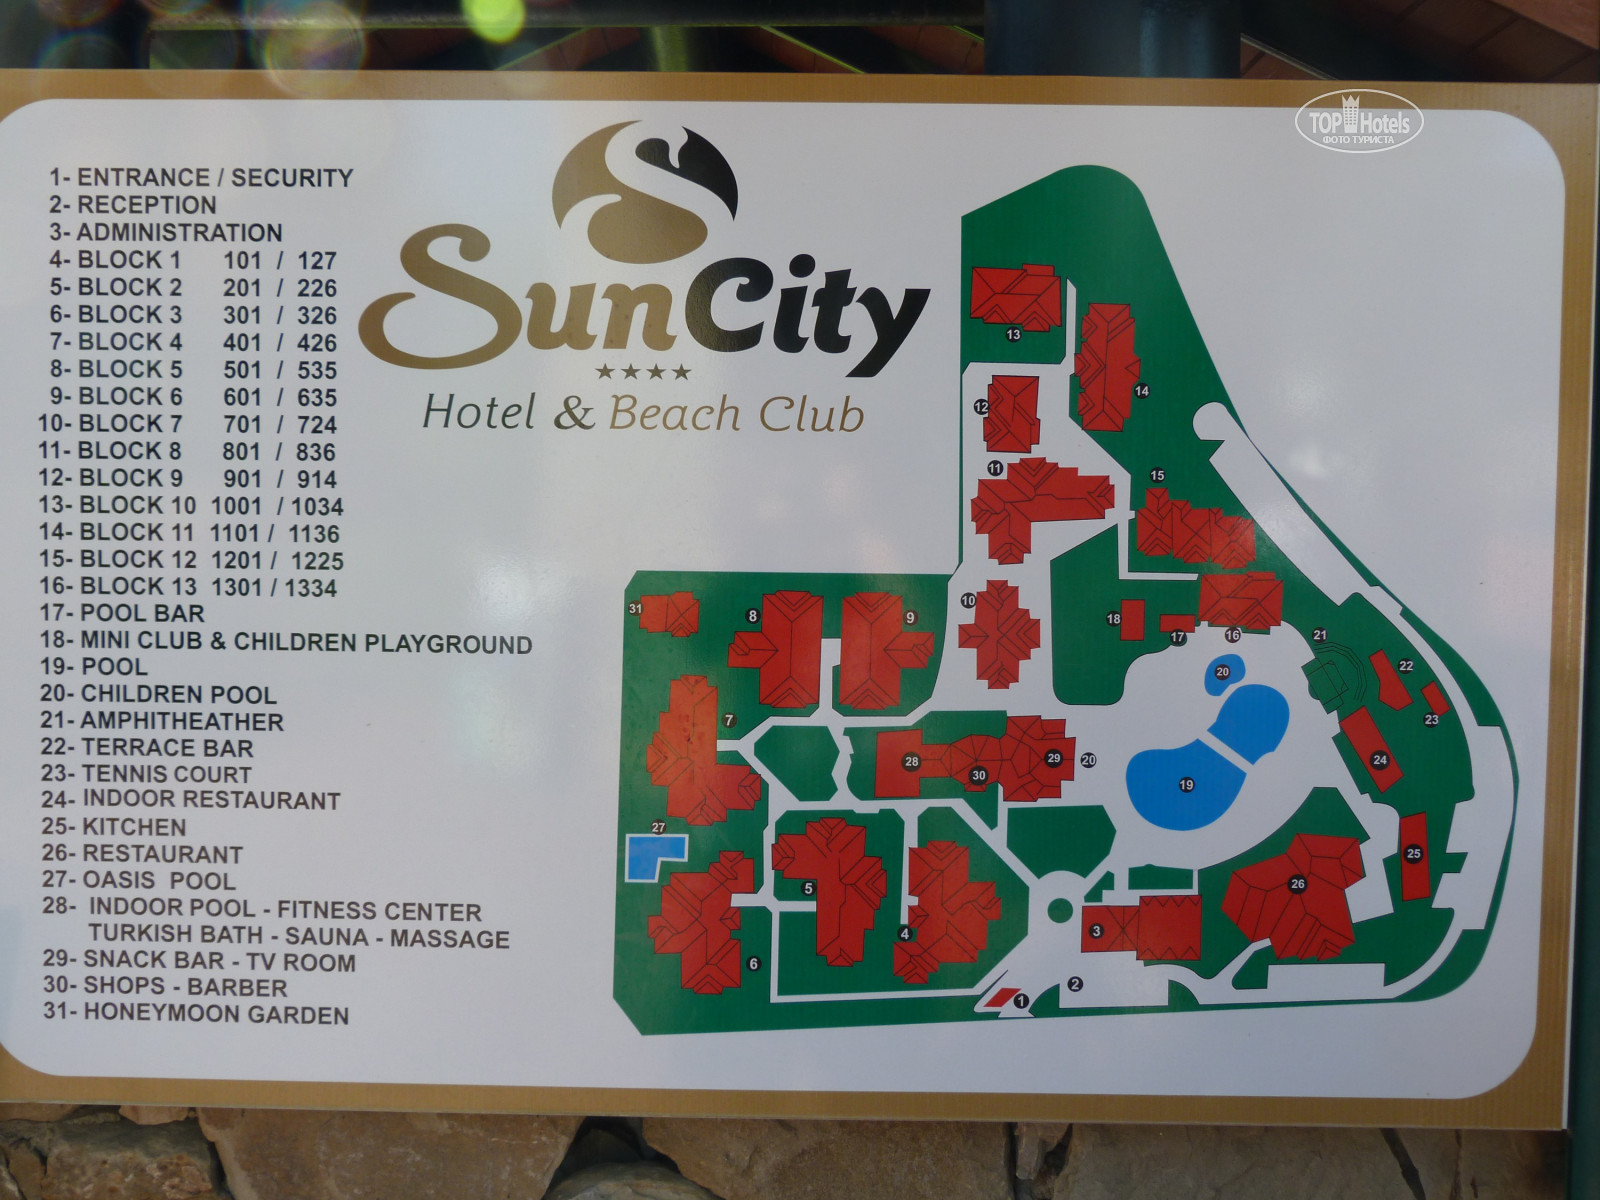 Sundia by liberty suncity 4. Sun City Hotel & Beach Club. Sun City Hotel & Beach Club 4*. Utopia Beach Club карта отеля. Карта отеля Gold City Hotel.